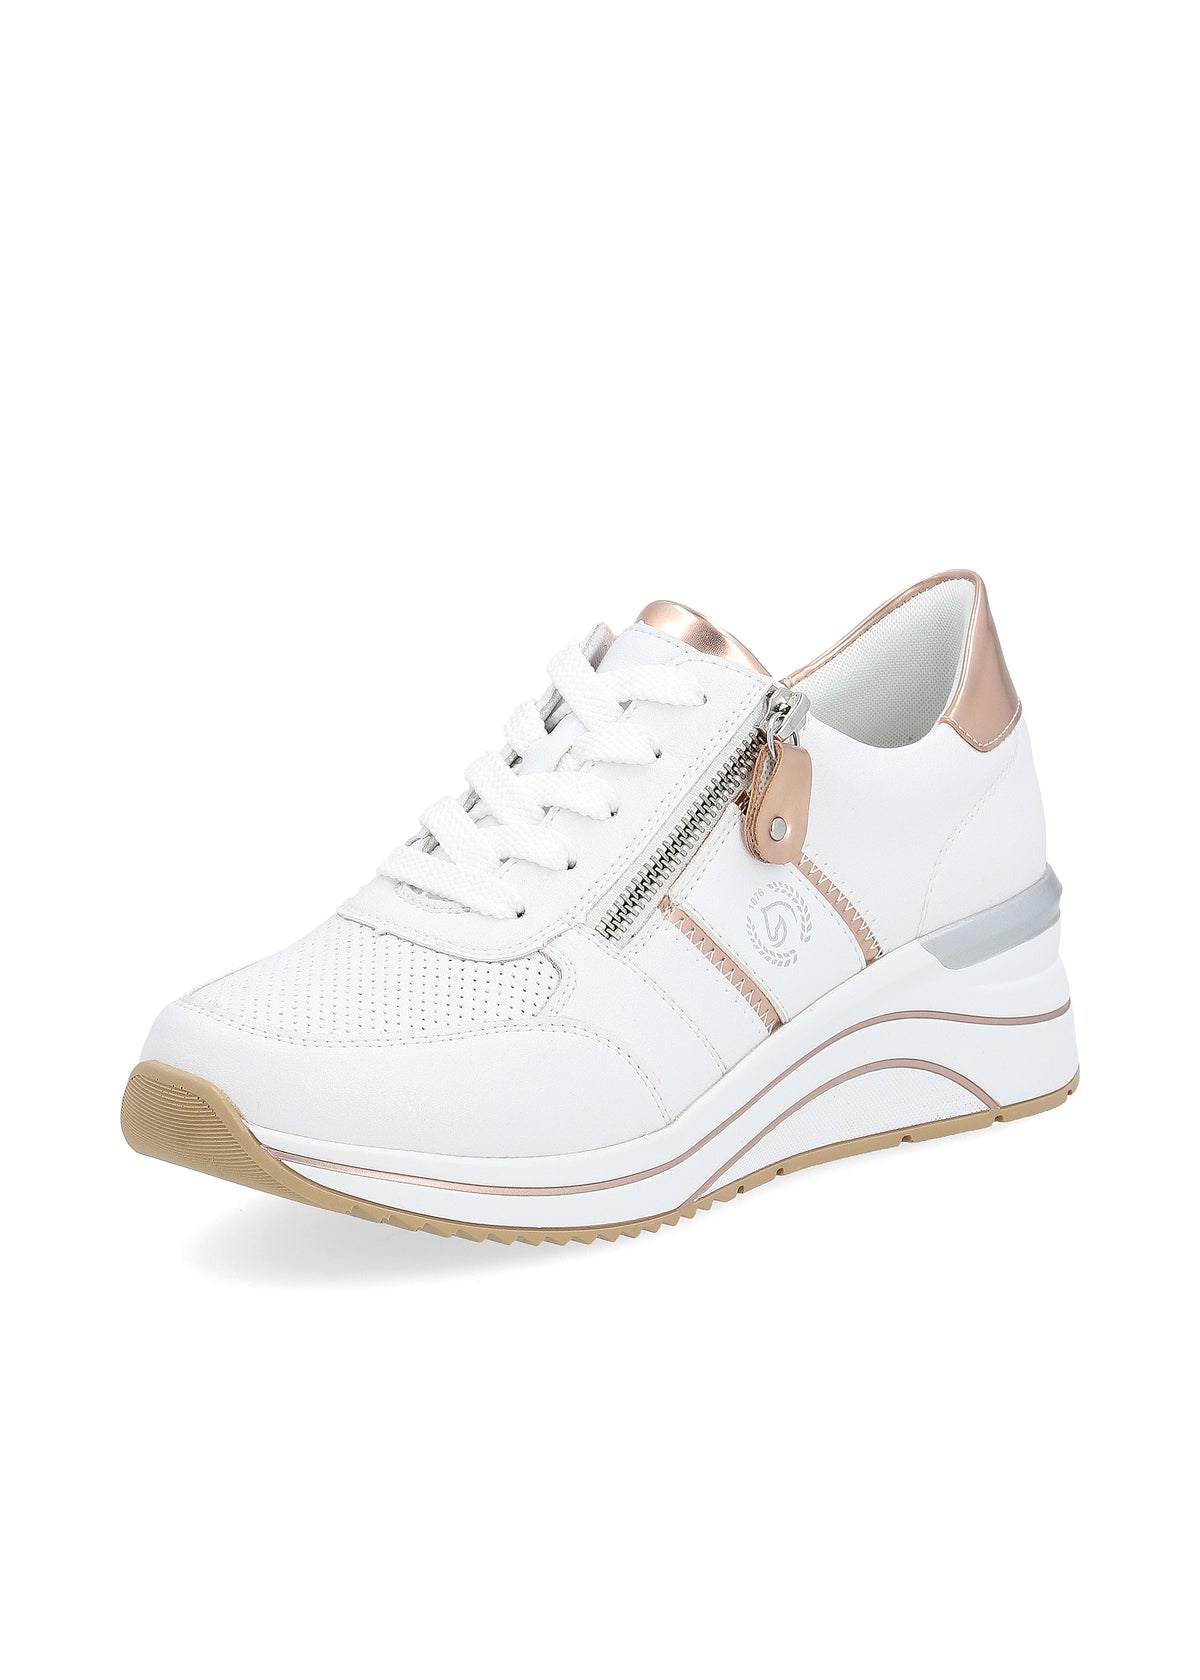 Sneakers med wedge-sula - vita, kopparfärgade detaljer